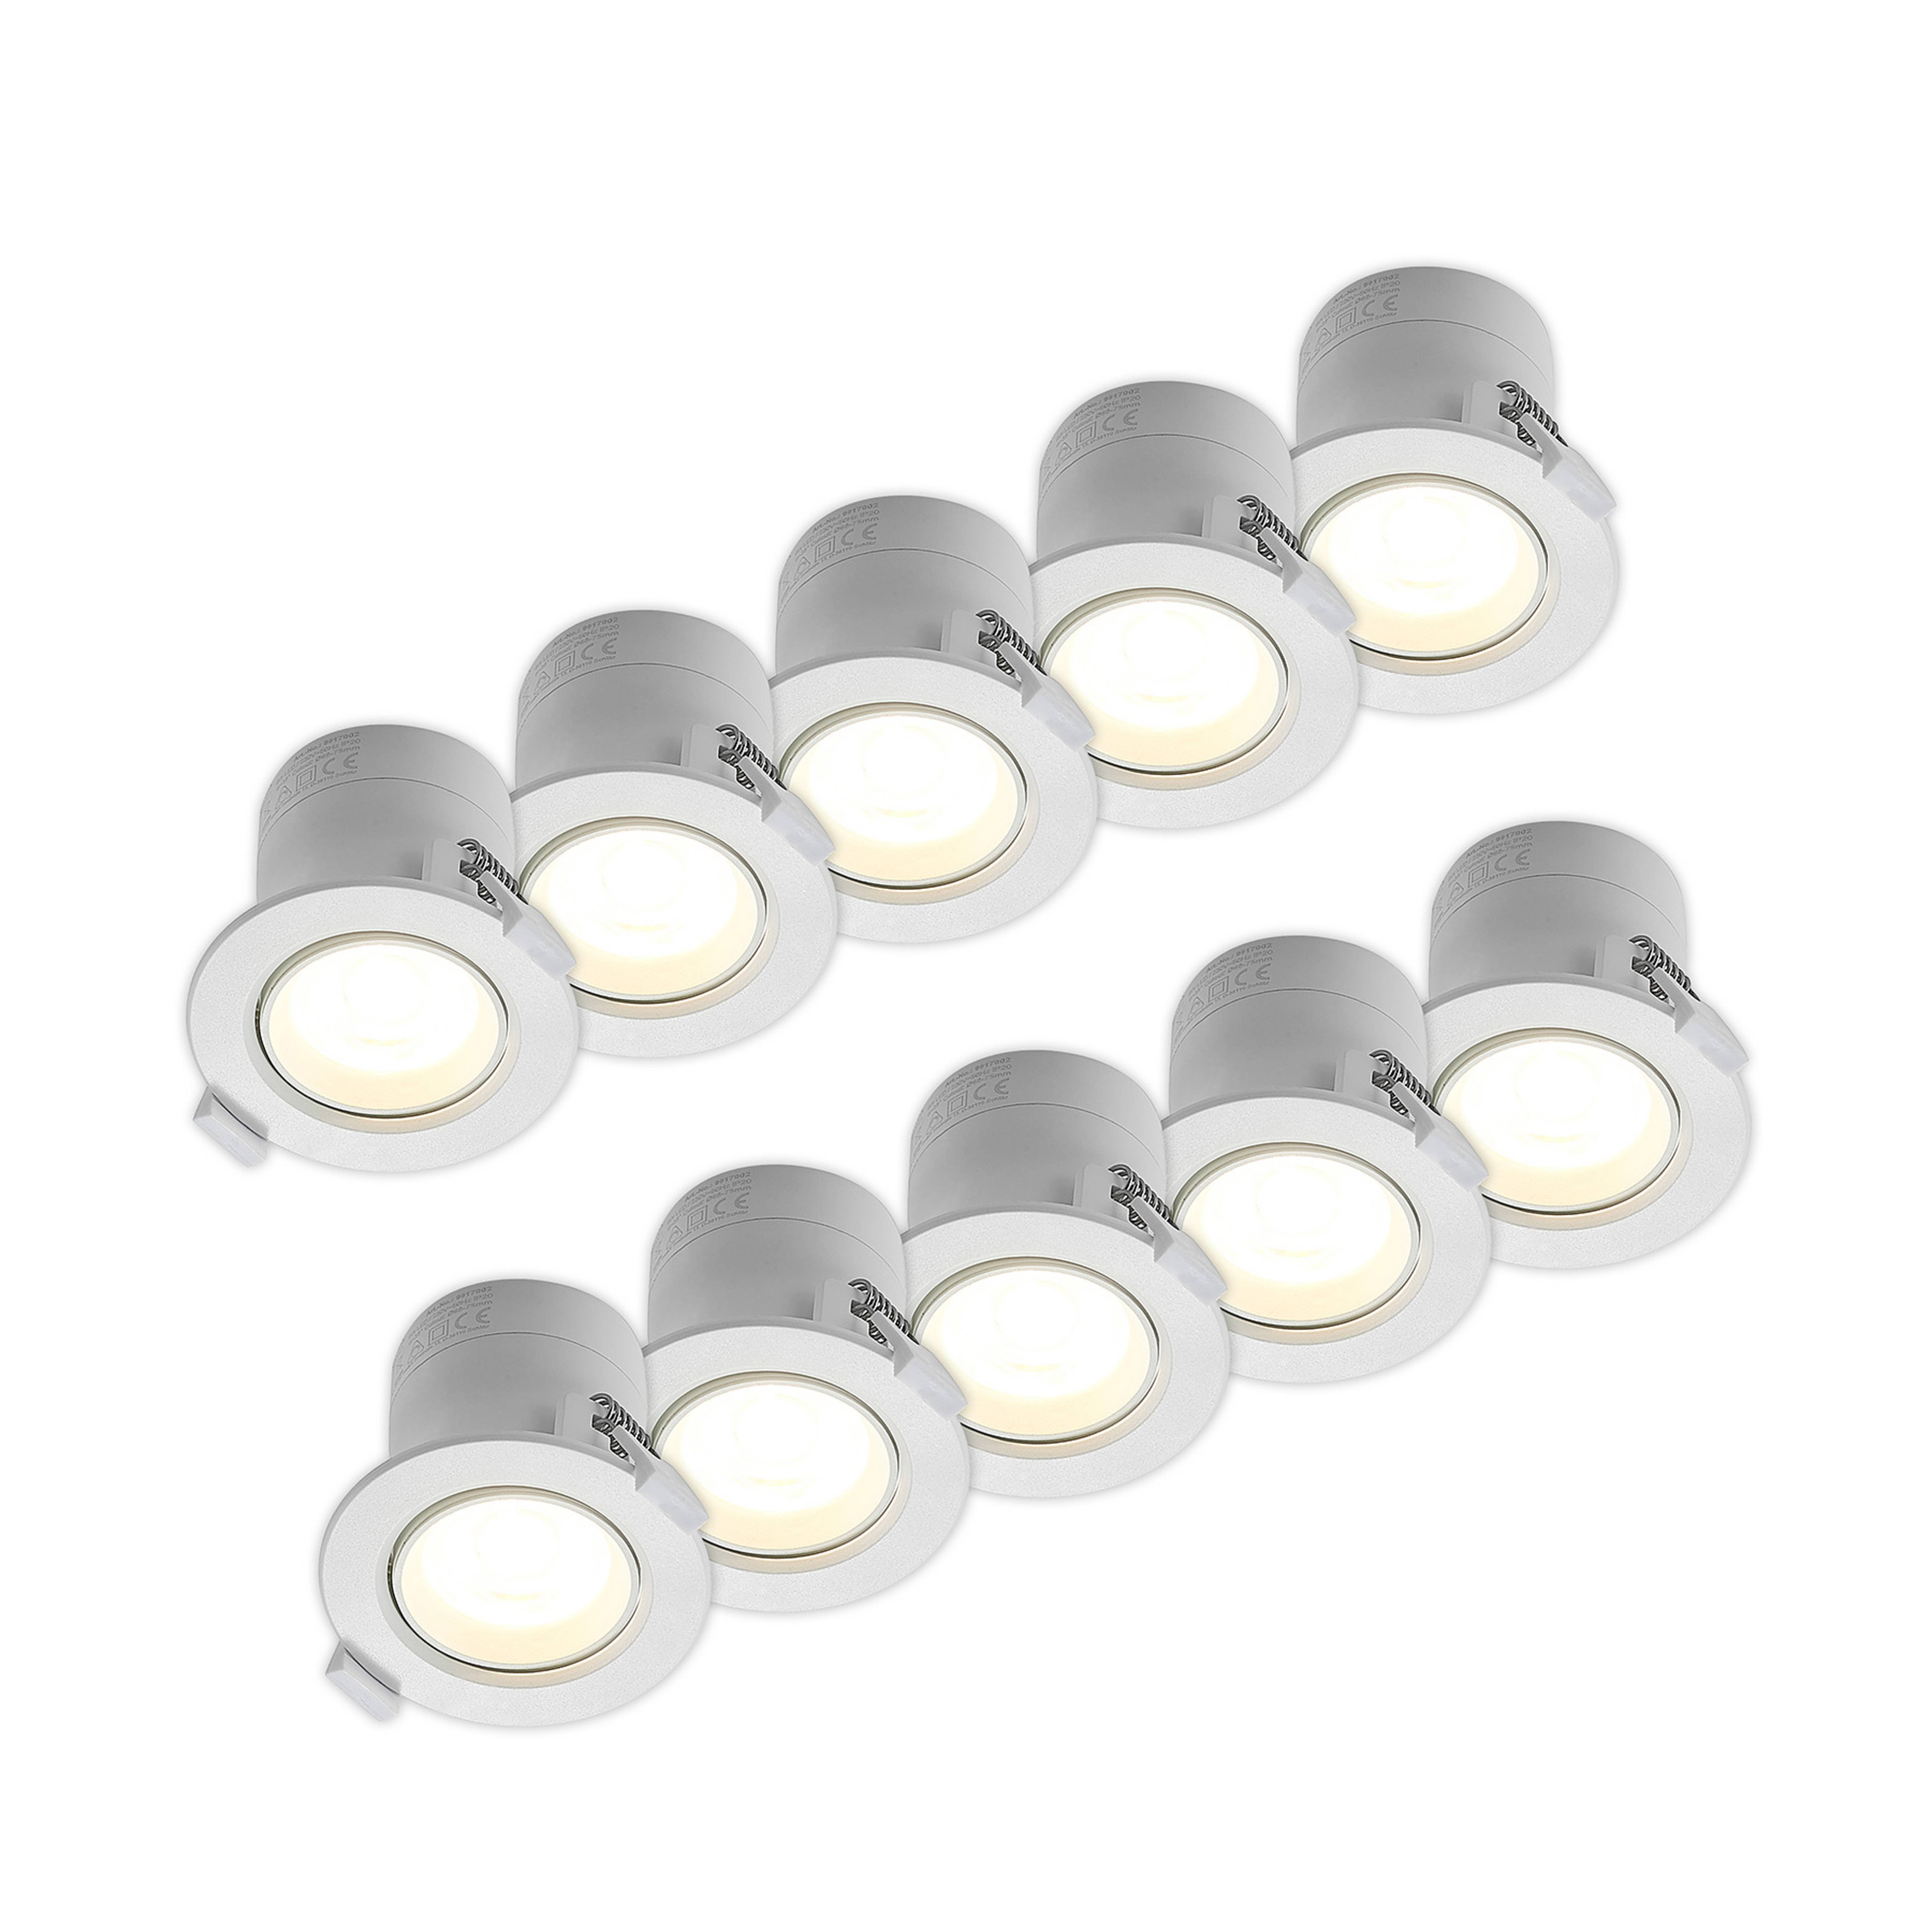 Lámpara empotrable Prios LED Shima, blanca, 9W, 3000K, 10pcs, atenuable